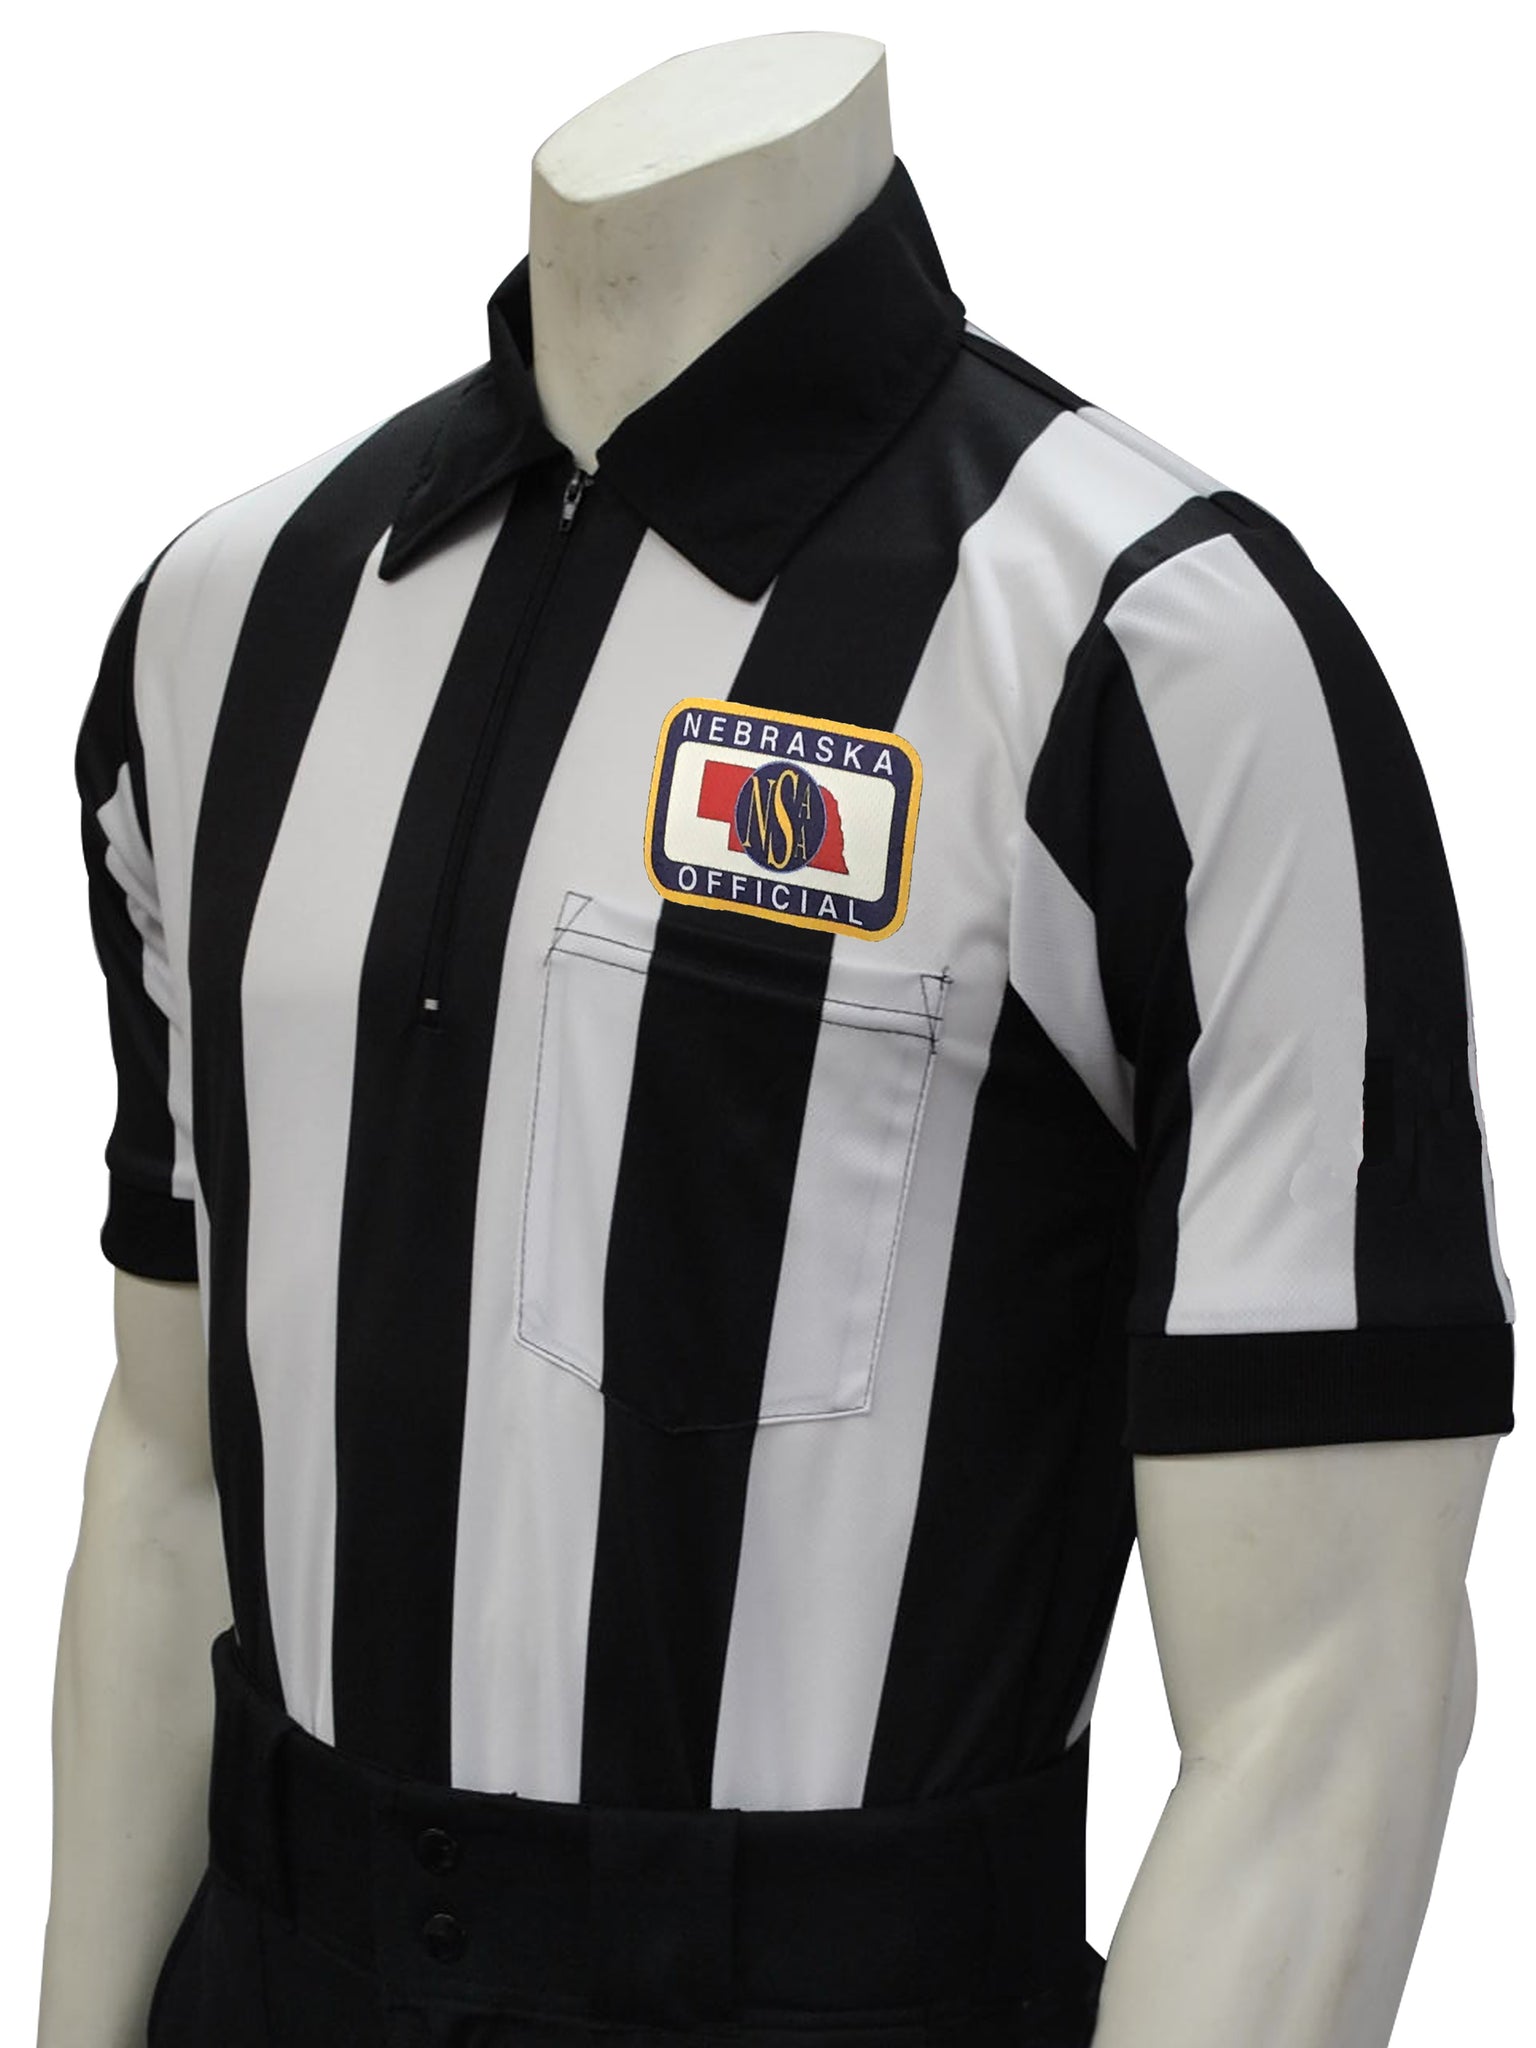 USA137NE-607 - Smitty "Made in USA" - Short Sleeve "BODY FLEX" Football Shirt